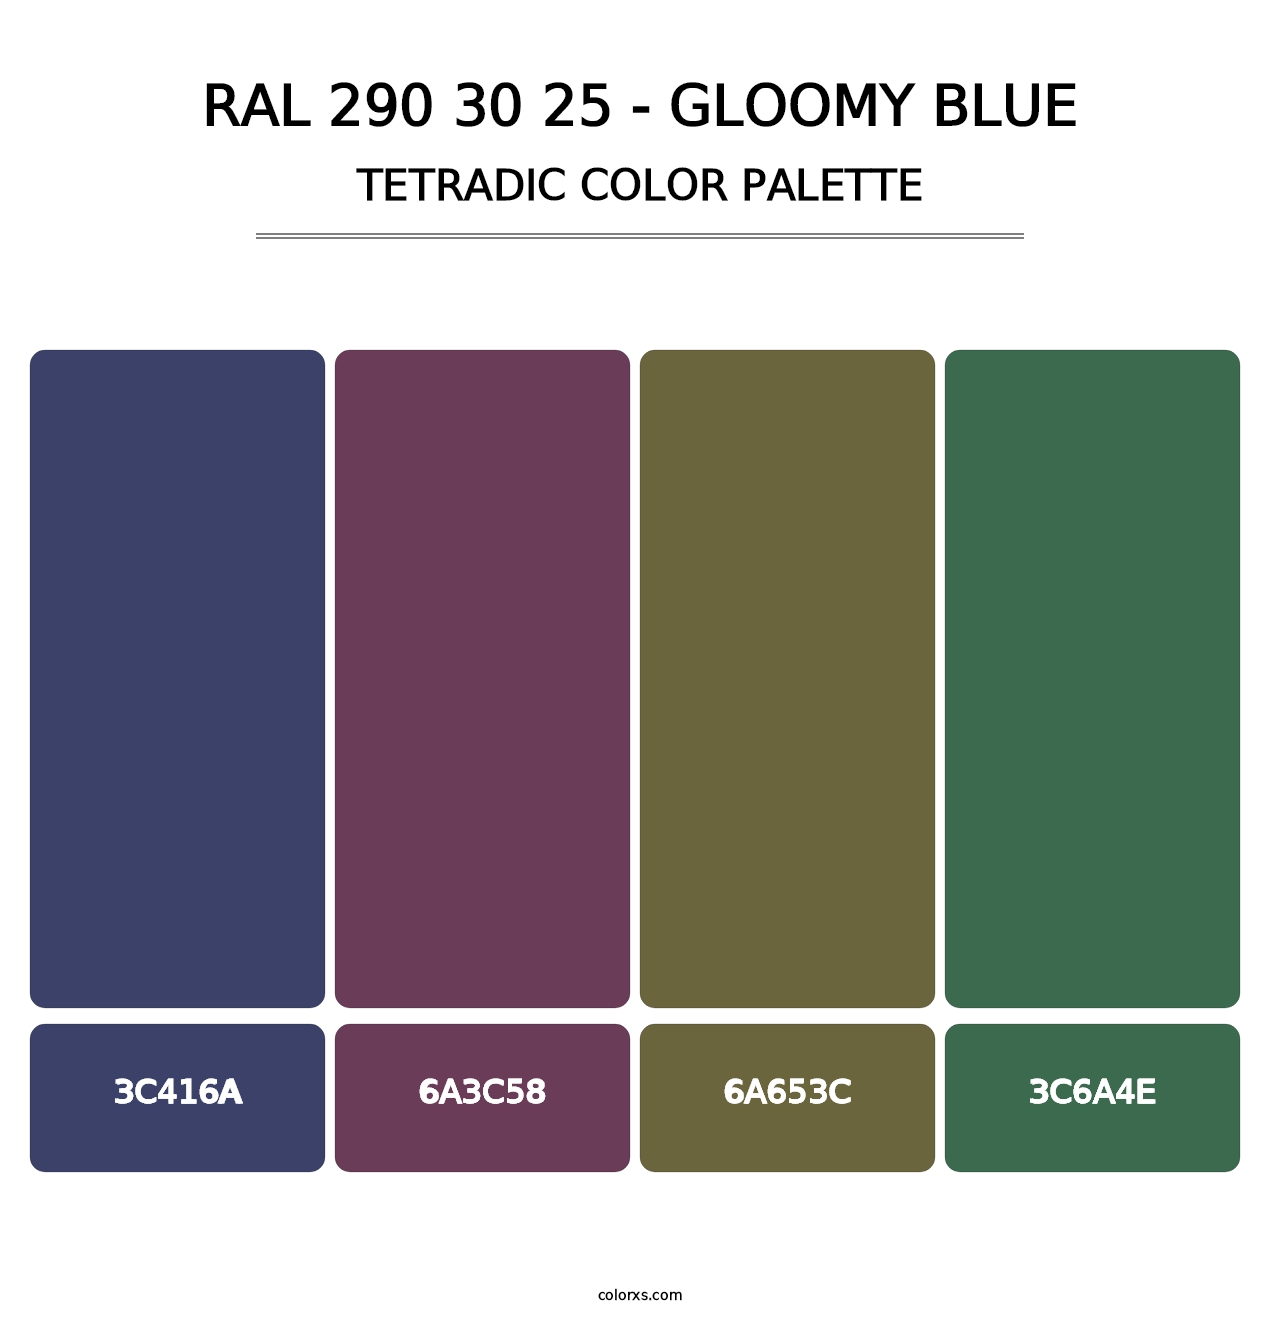 RAL 290 30 25 - Gloomy Blue - Tetradic Color Palette